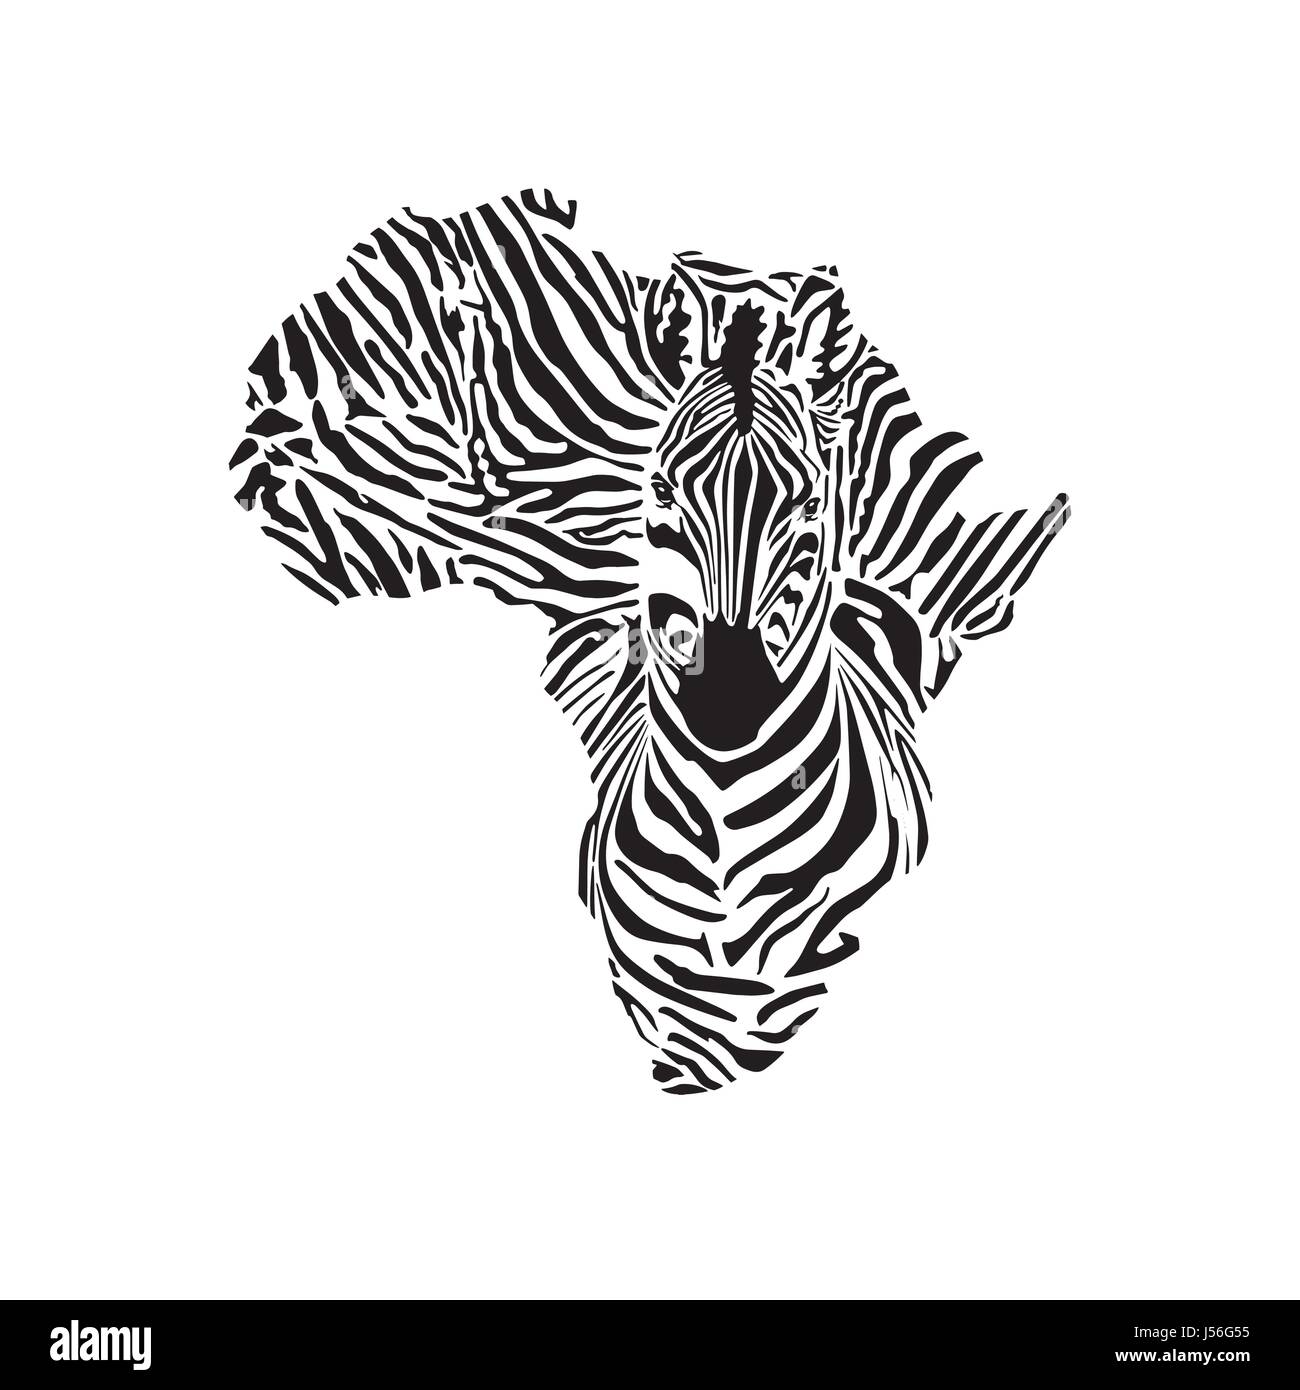 Afrika und Zebra tattoo-design Stock Vektor